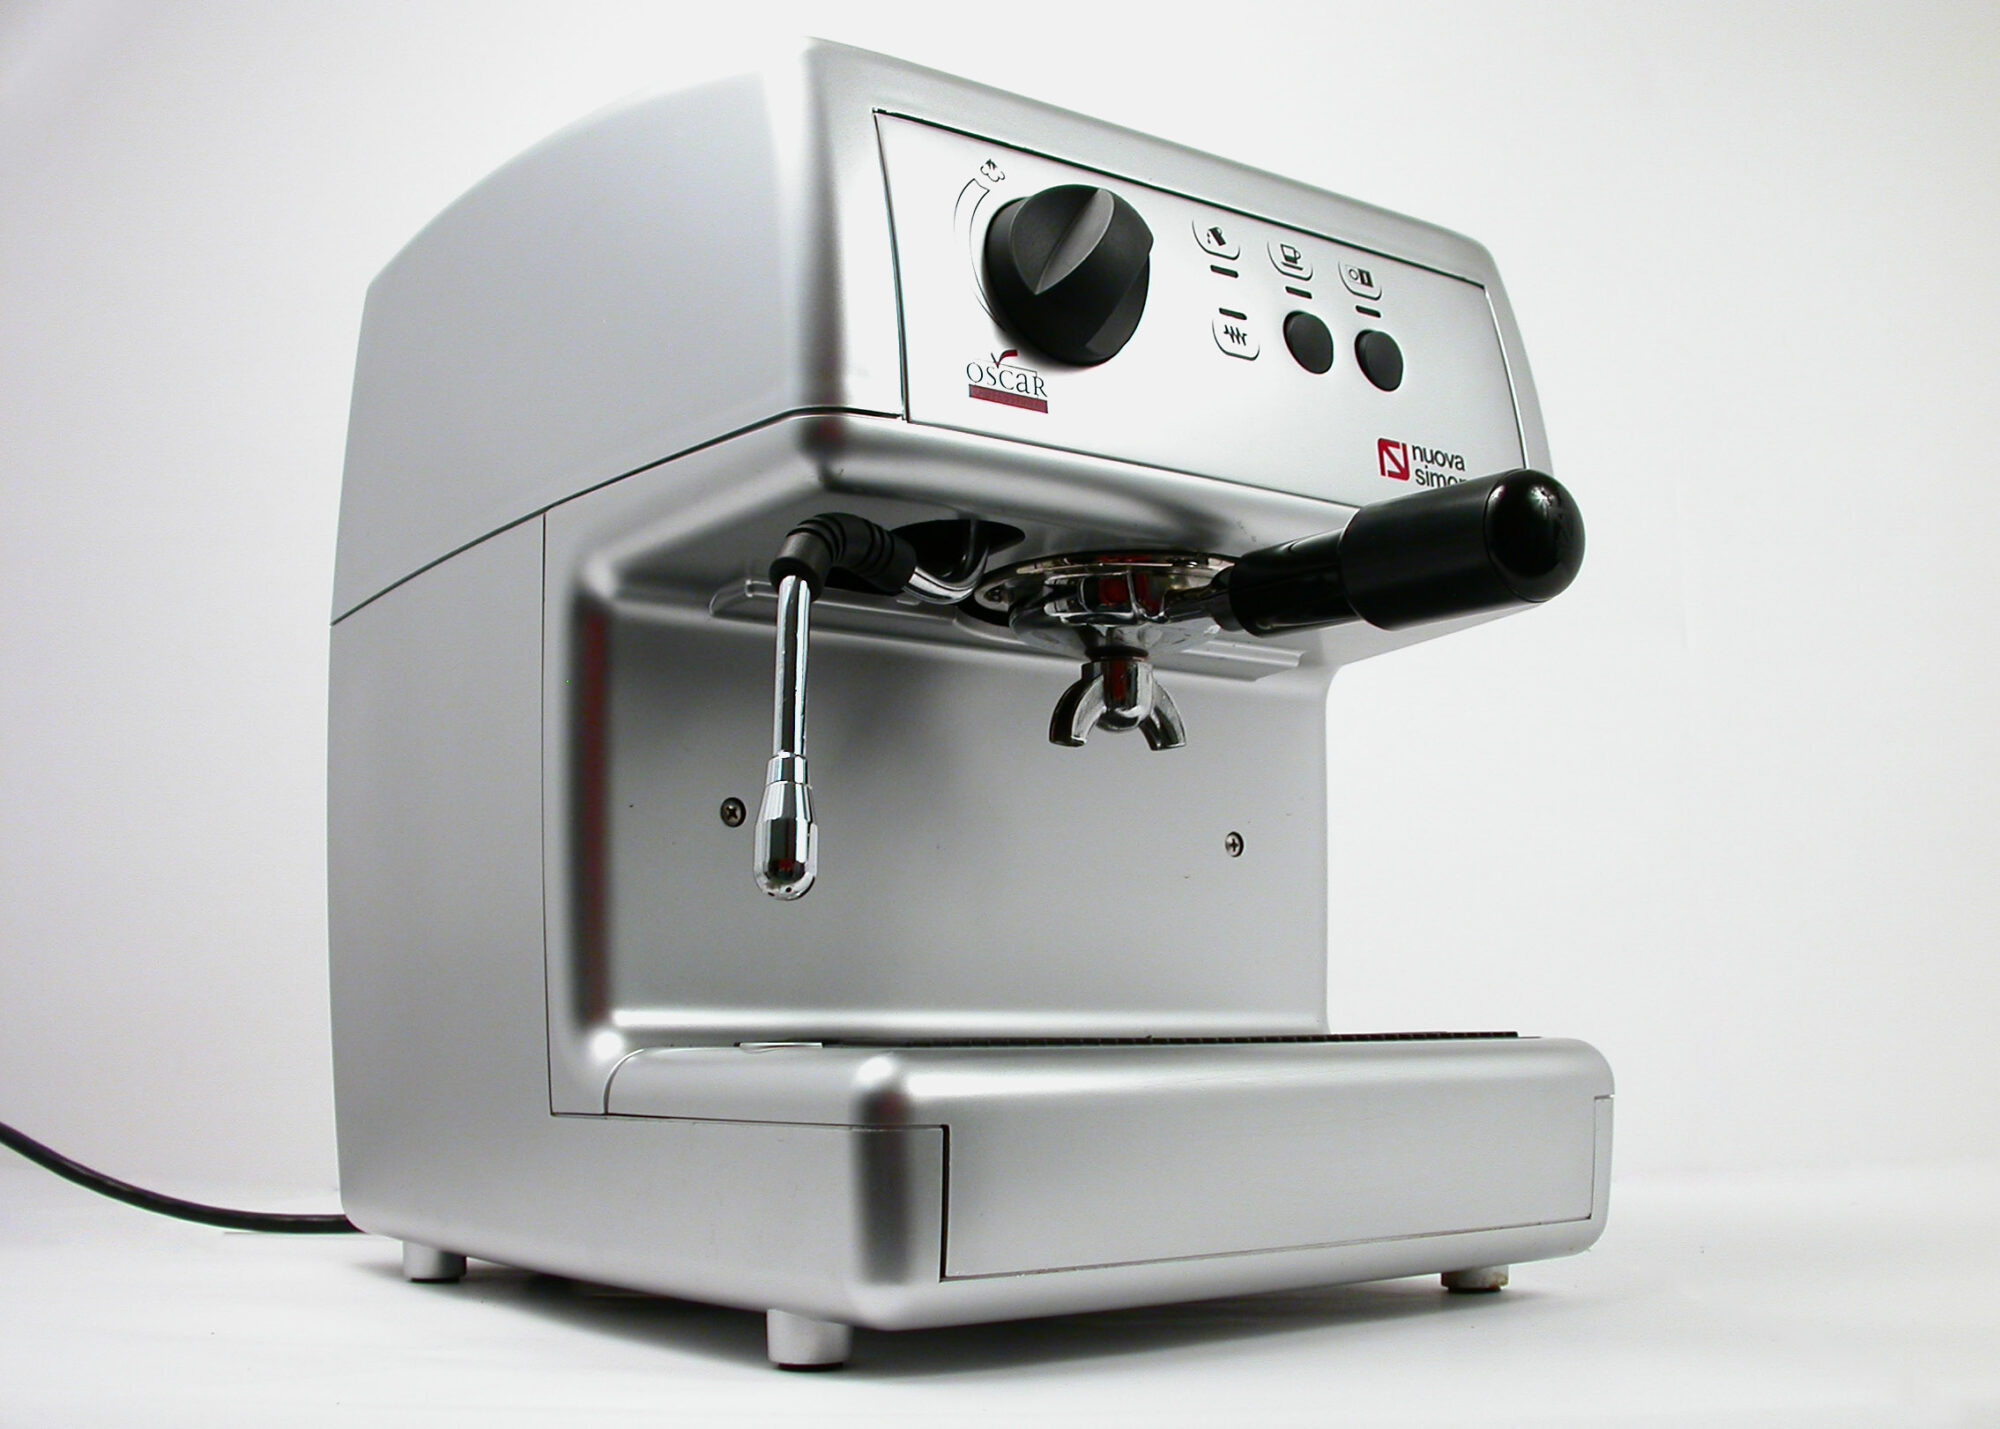 Nuova Simonelli Oscar Espresso Machine First Look - CoffeeGeek